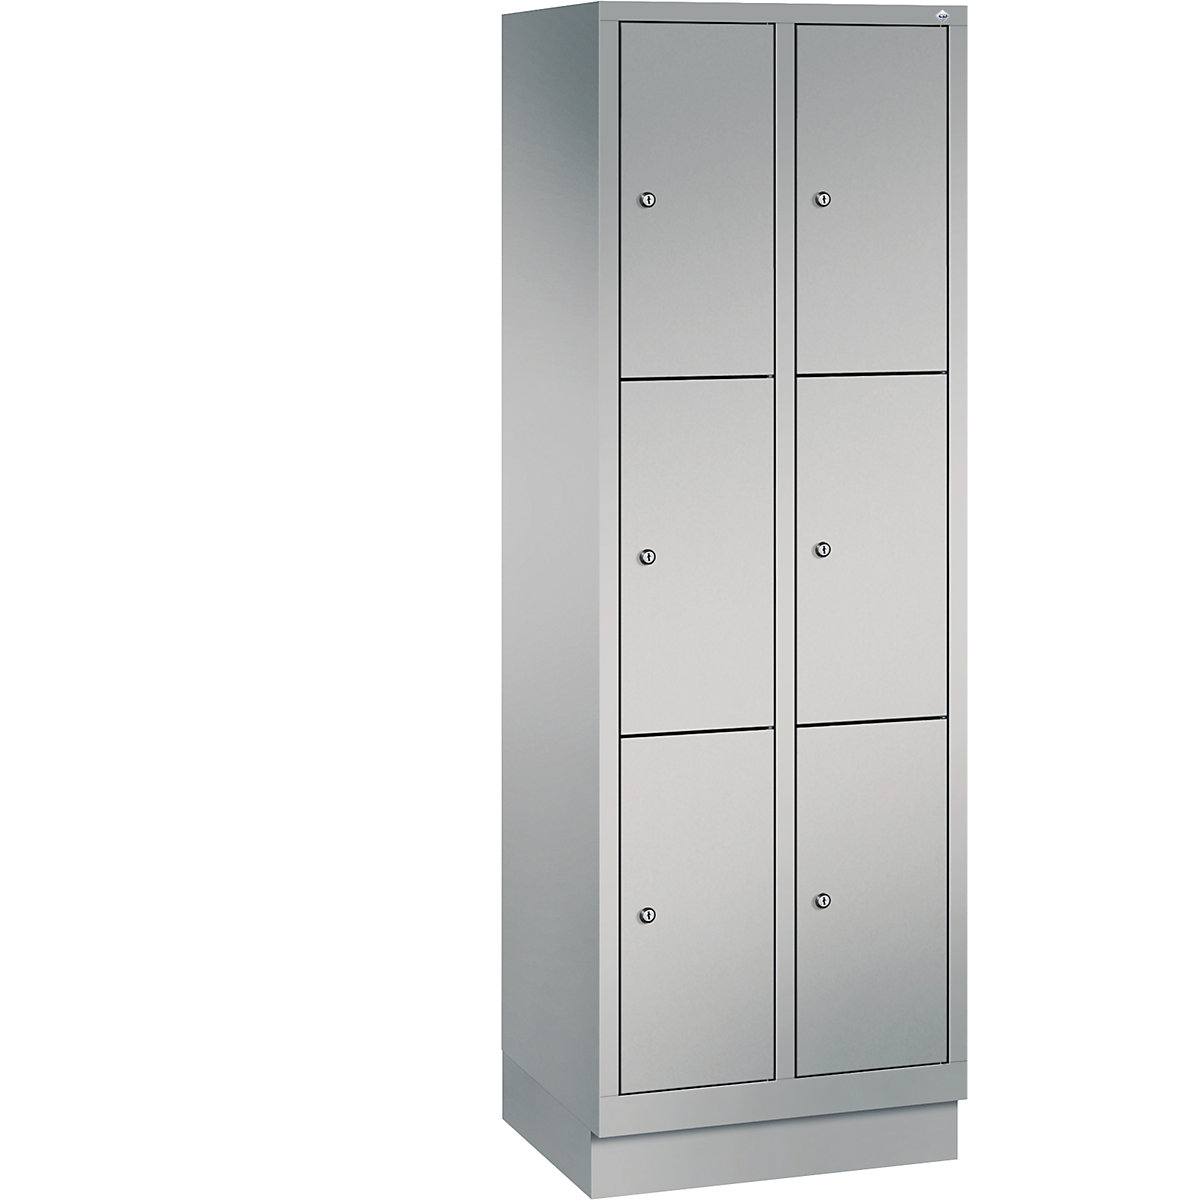 CLASSIC locker unit with plinth – C+P, 2 compartments, 3 shelf compartments each, compartment width 300 mm, white aluminium-5